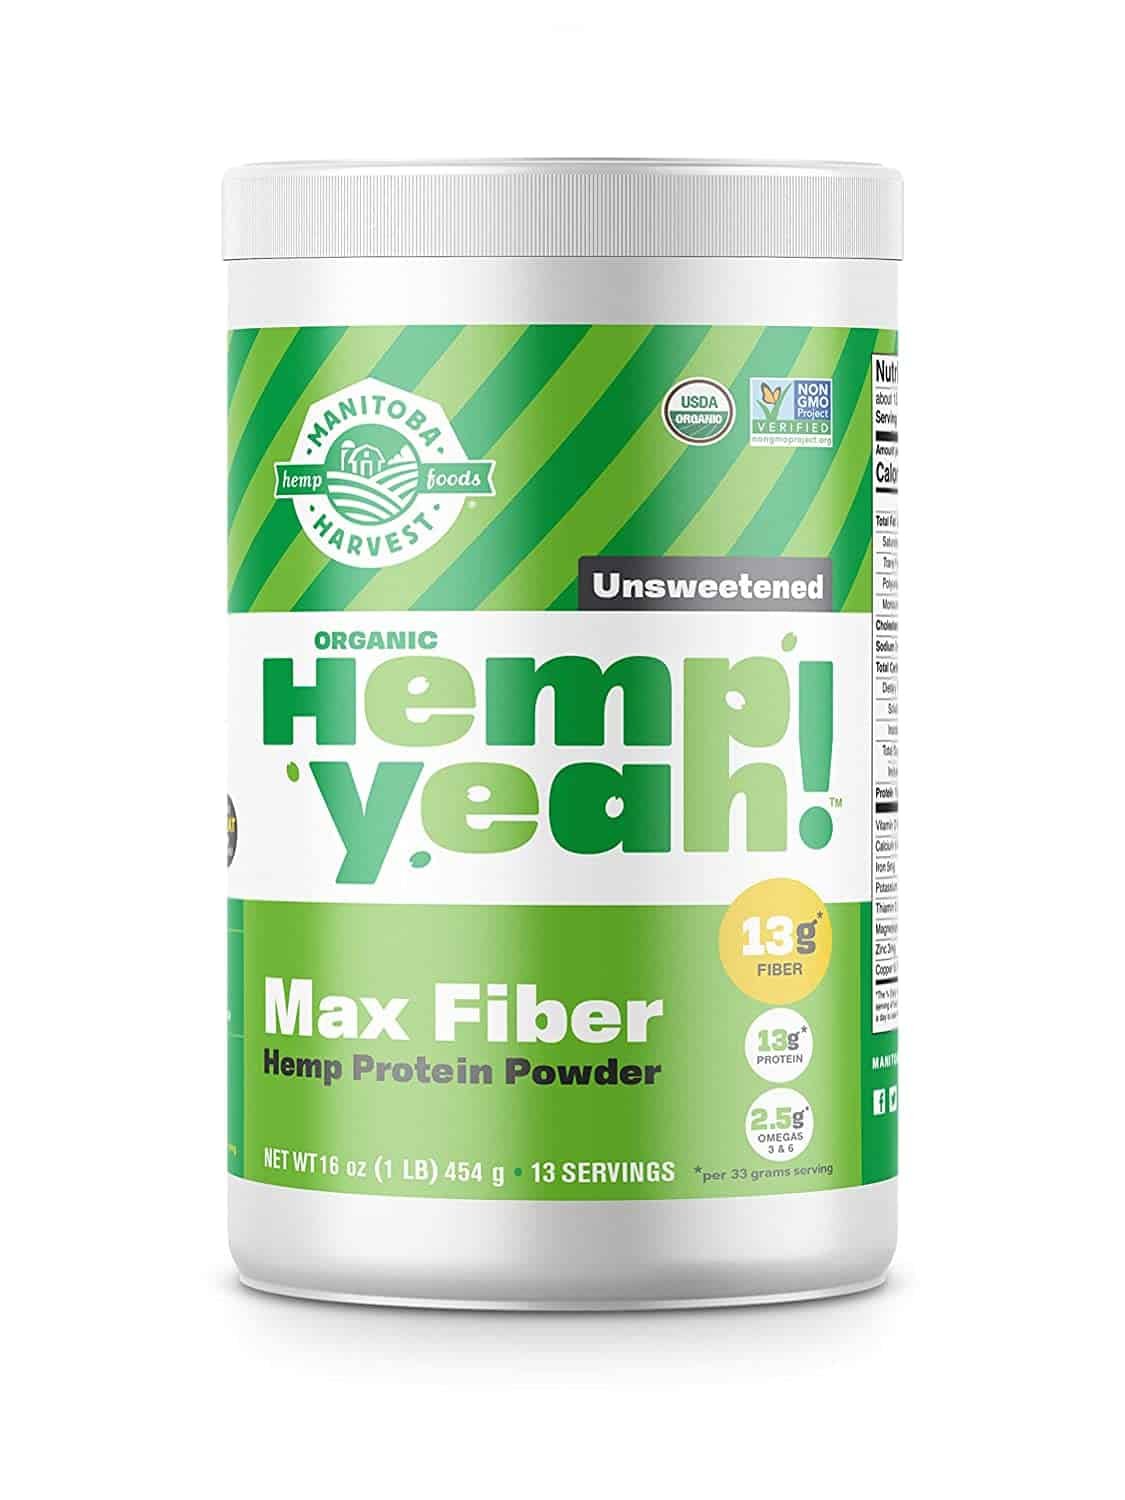 Manitoba Harvest Hemp Yeah! Organic Max Fiber Protein Powder